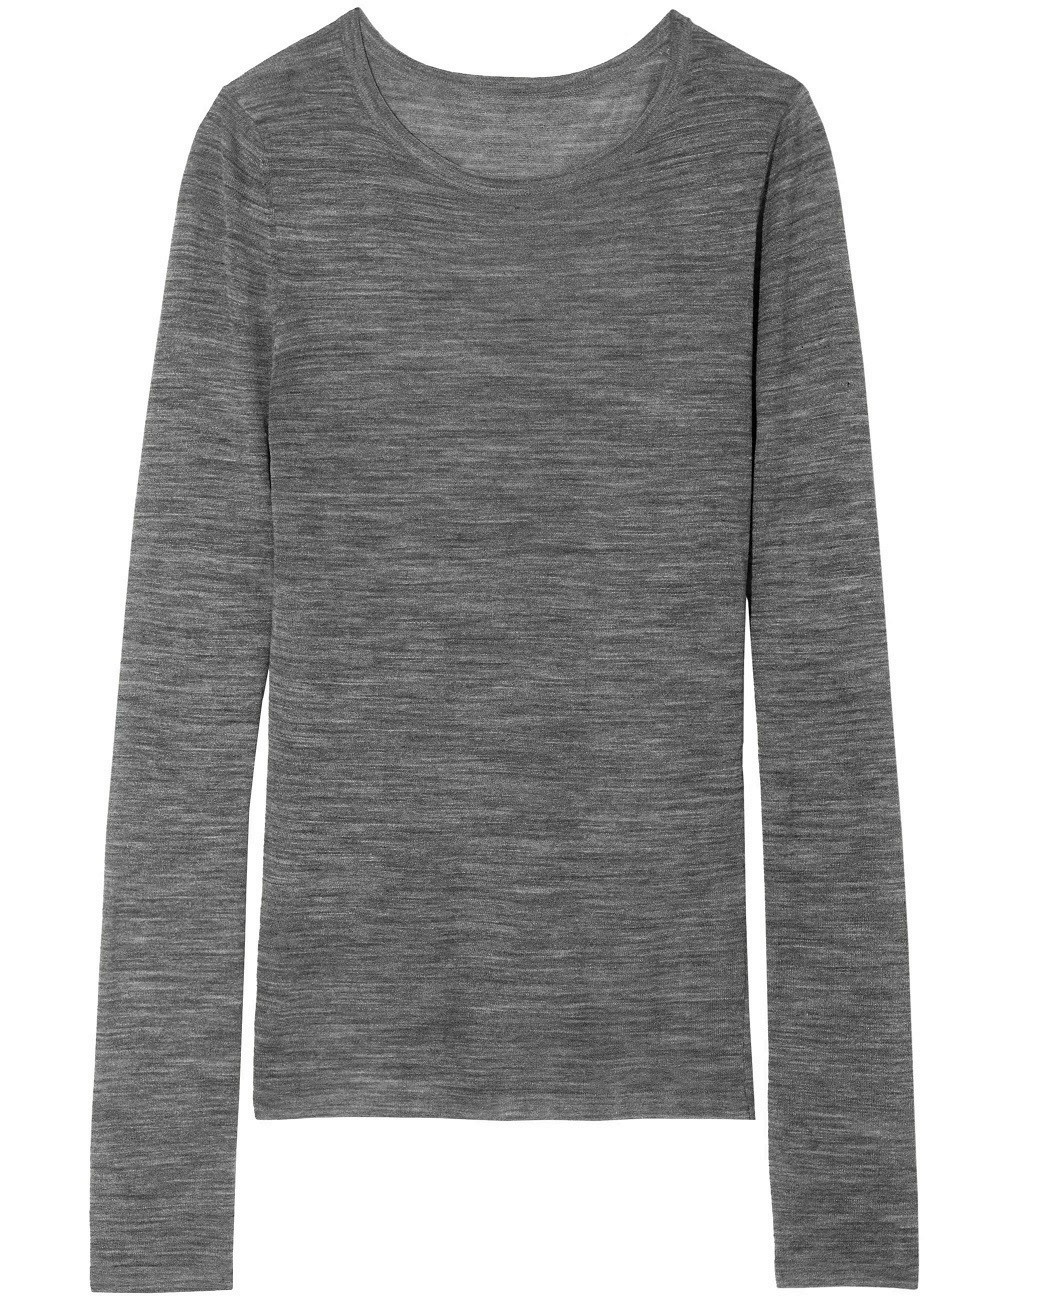 NILI LOTAN Silk Knit Sweater Candice in Dark Grey Melange XS